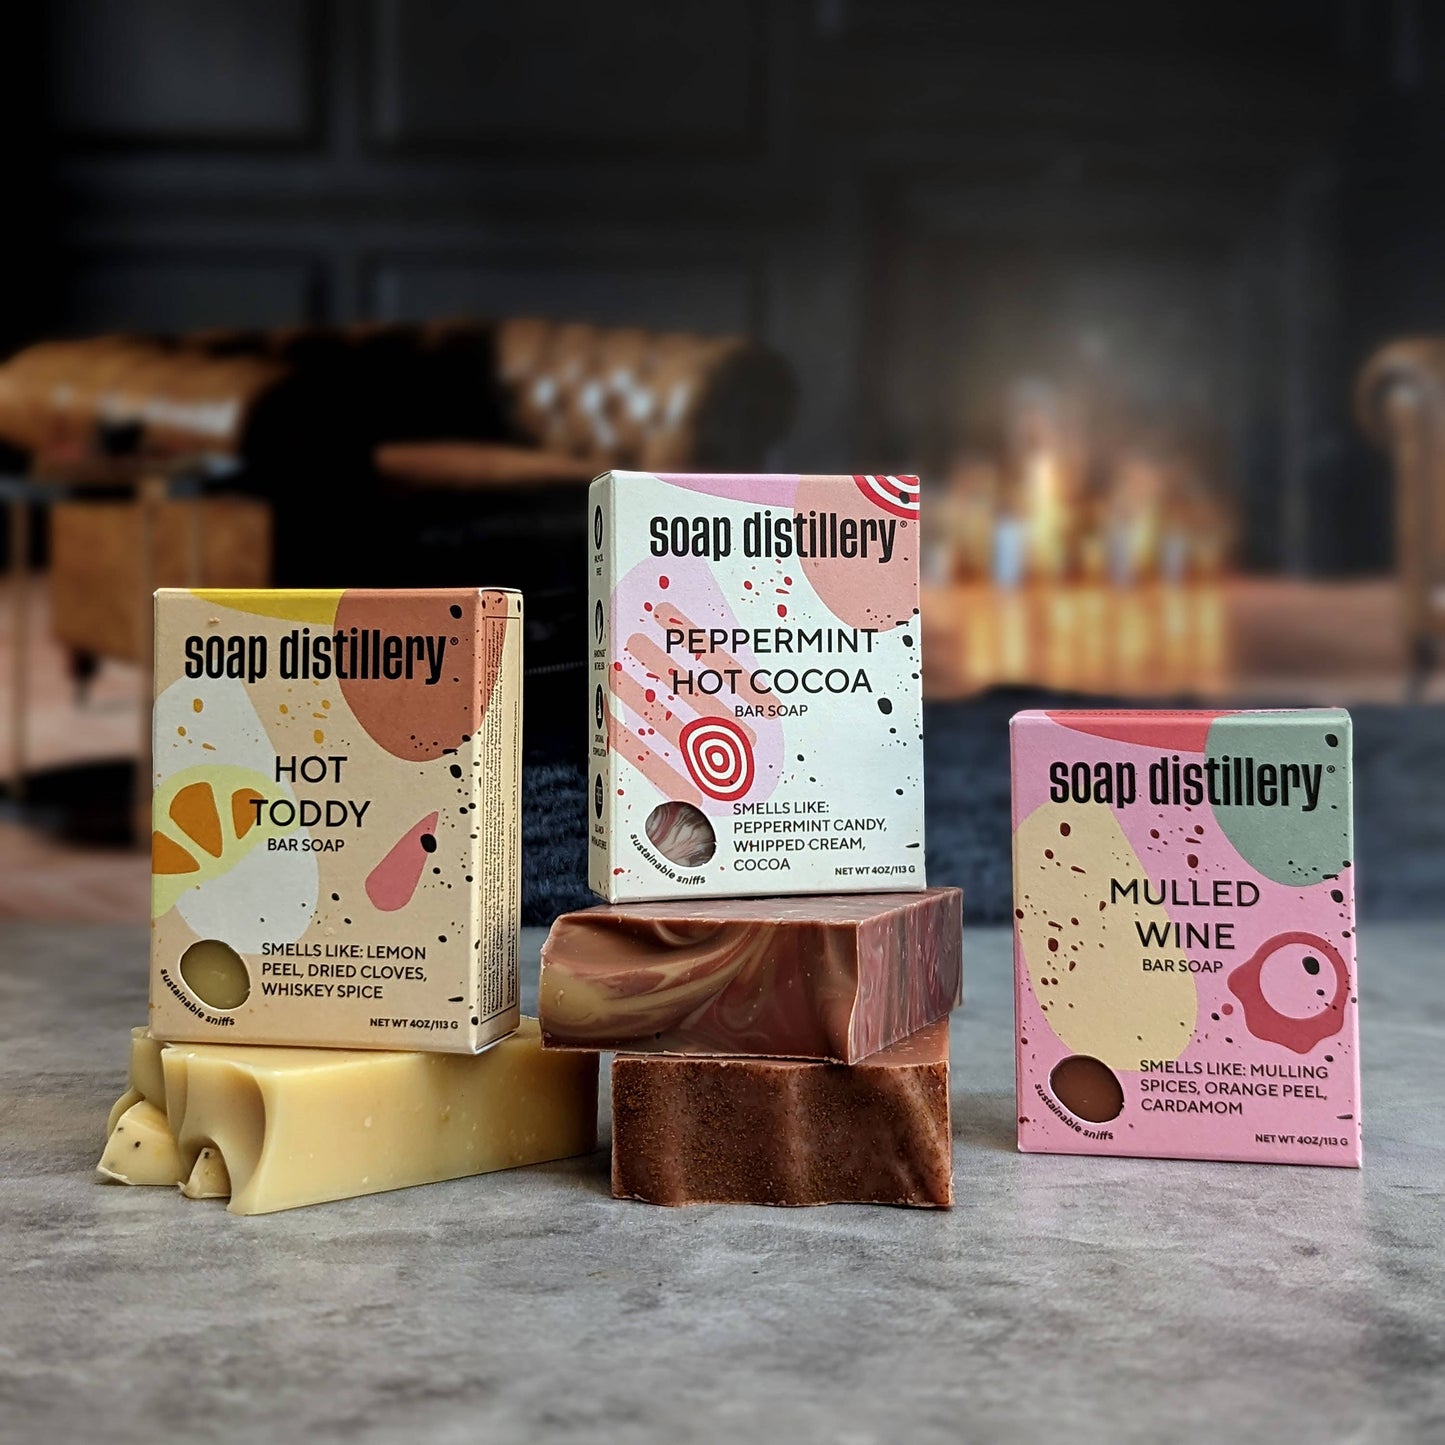 Soap Distillery - Hot Toddy Bar Soap